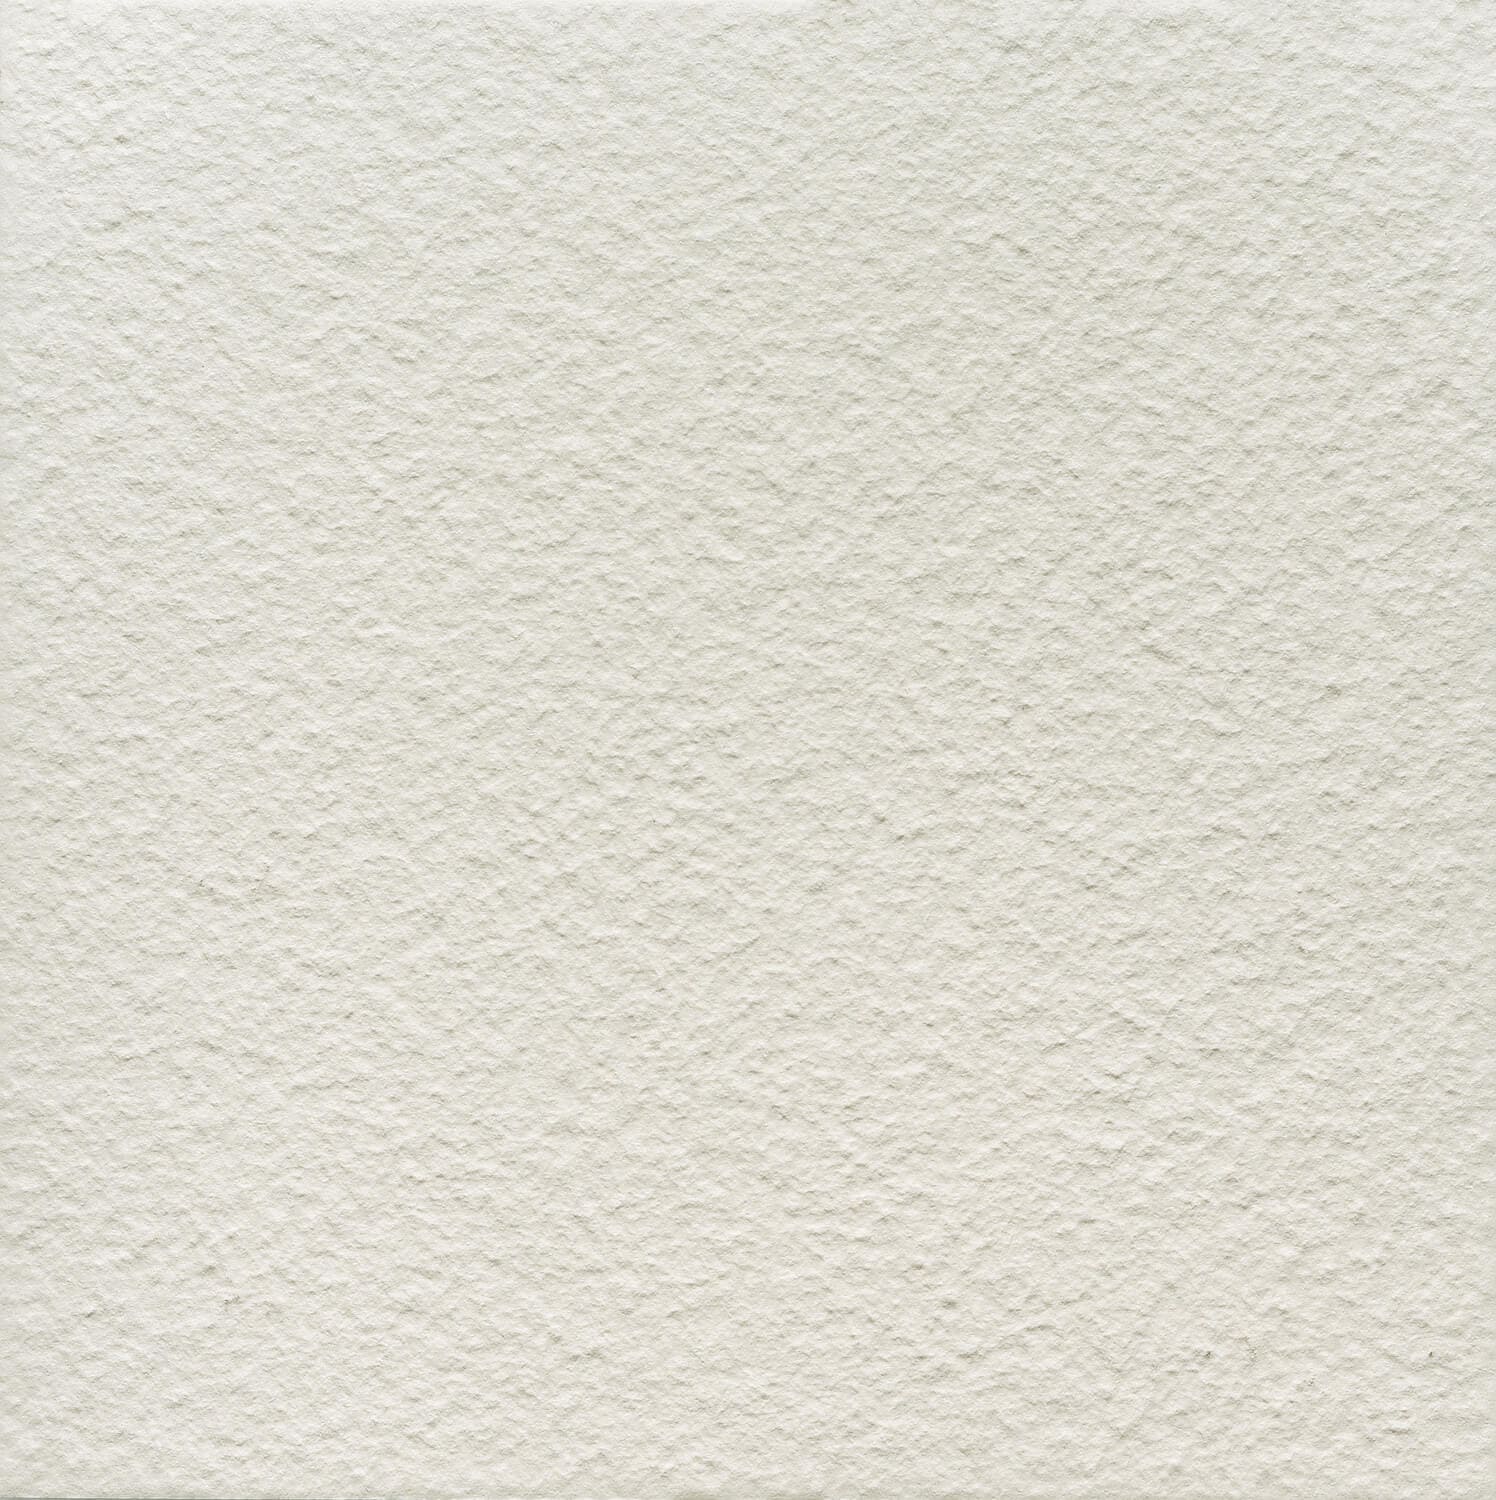 Dorset Woolliscroft Luna White Slip Resistant Quarry Tile 300x300mm